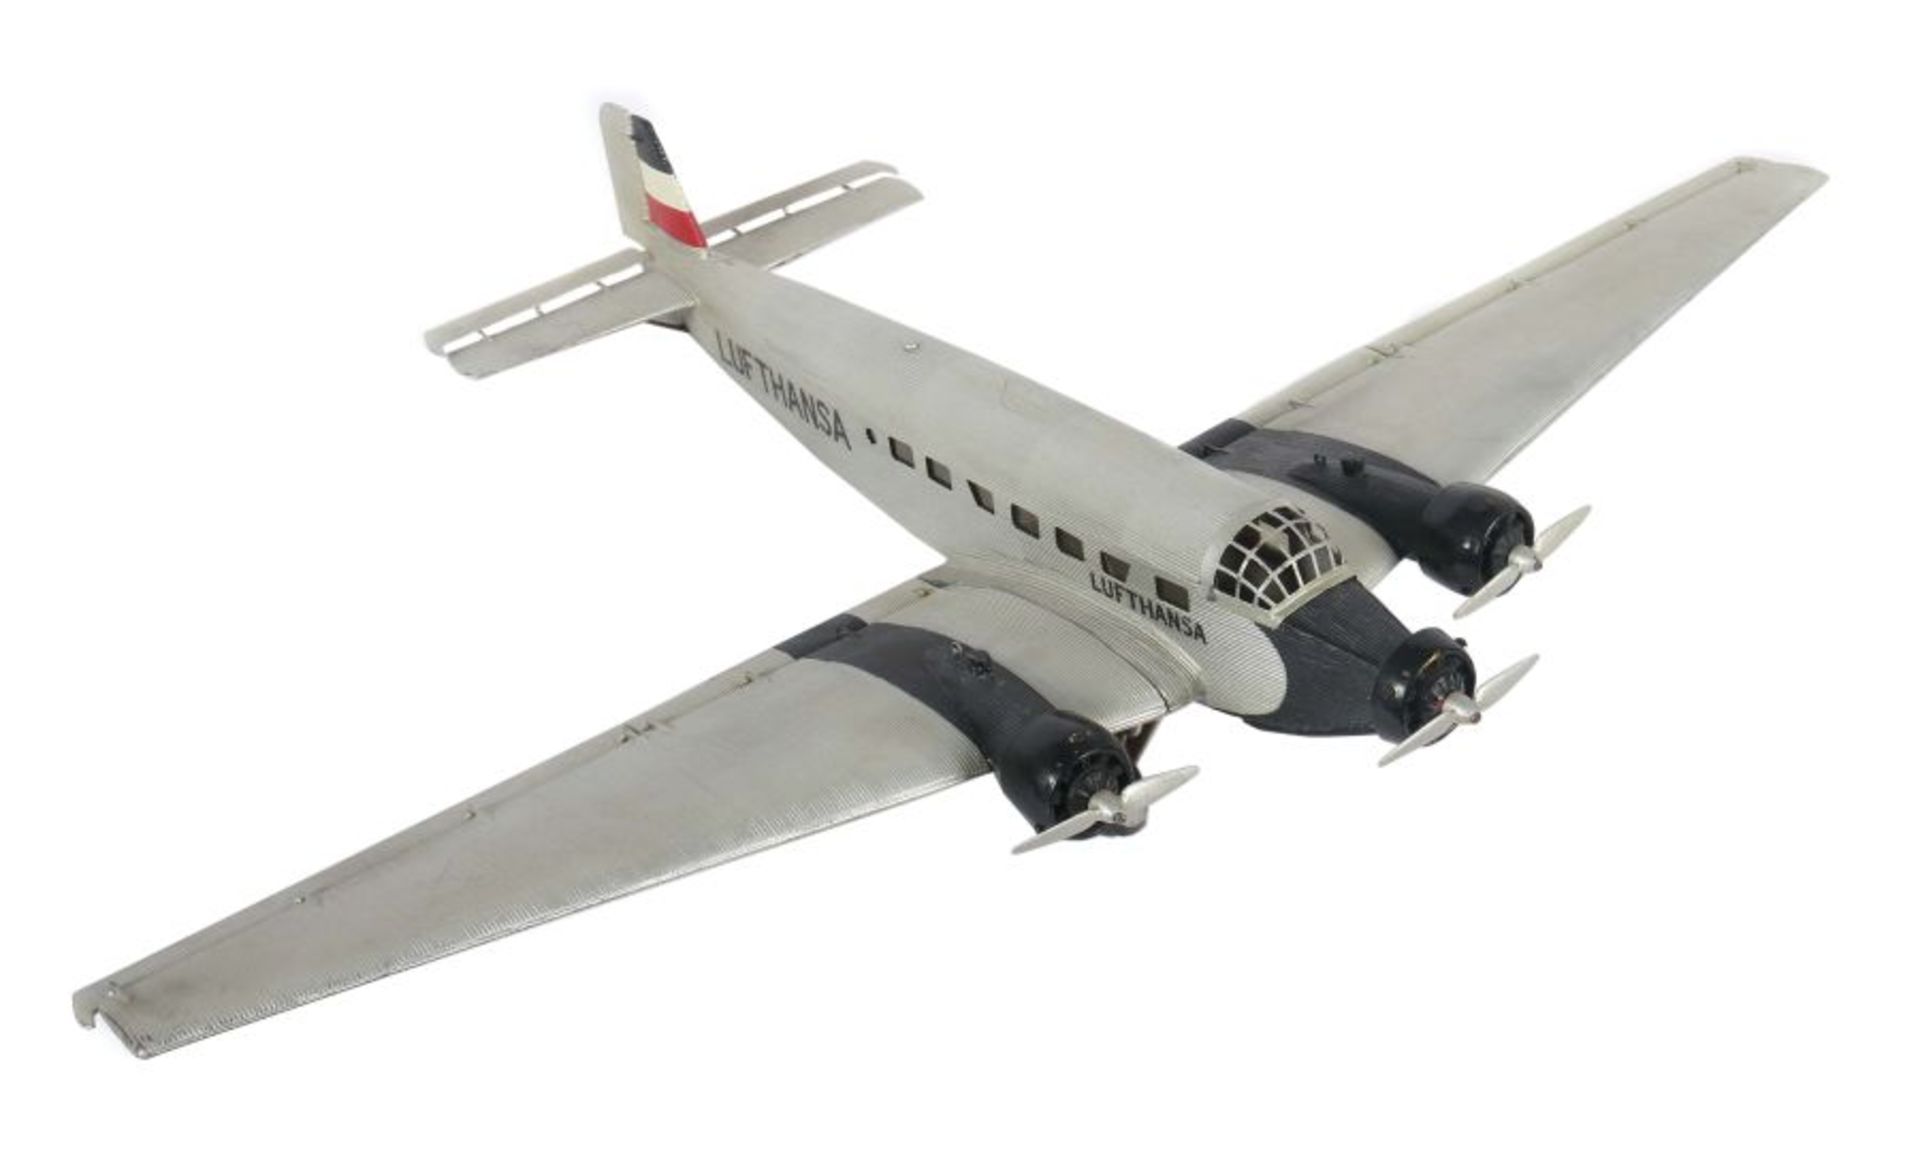 ModellflugzeugMärklin, Junkers "JU 52", histrorisches Reisebüromodell, 3-motorig, Wellblech,